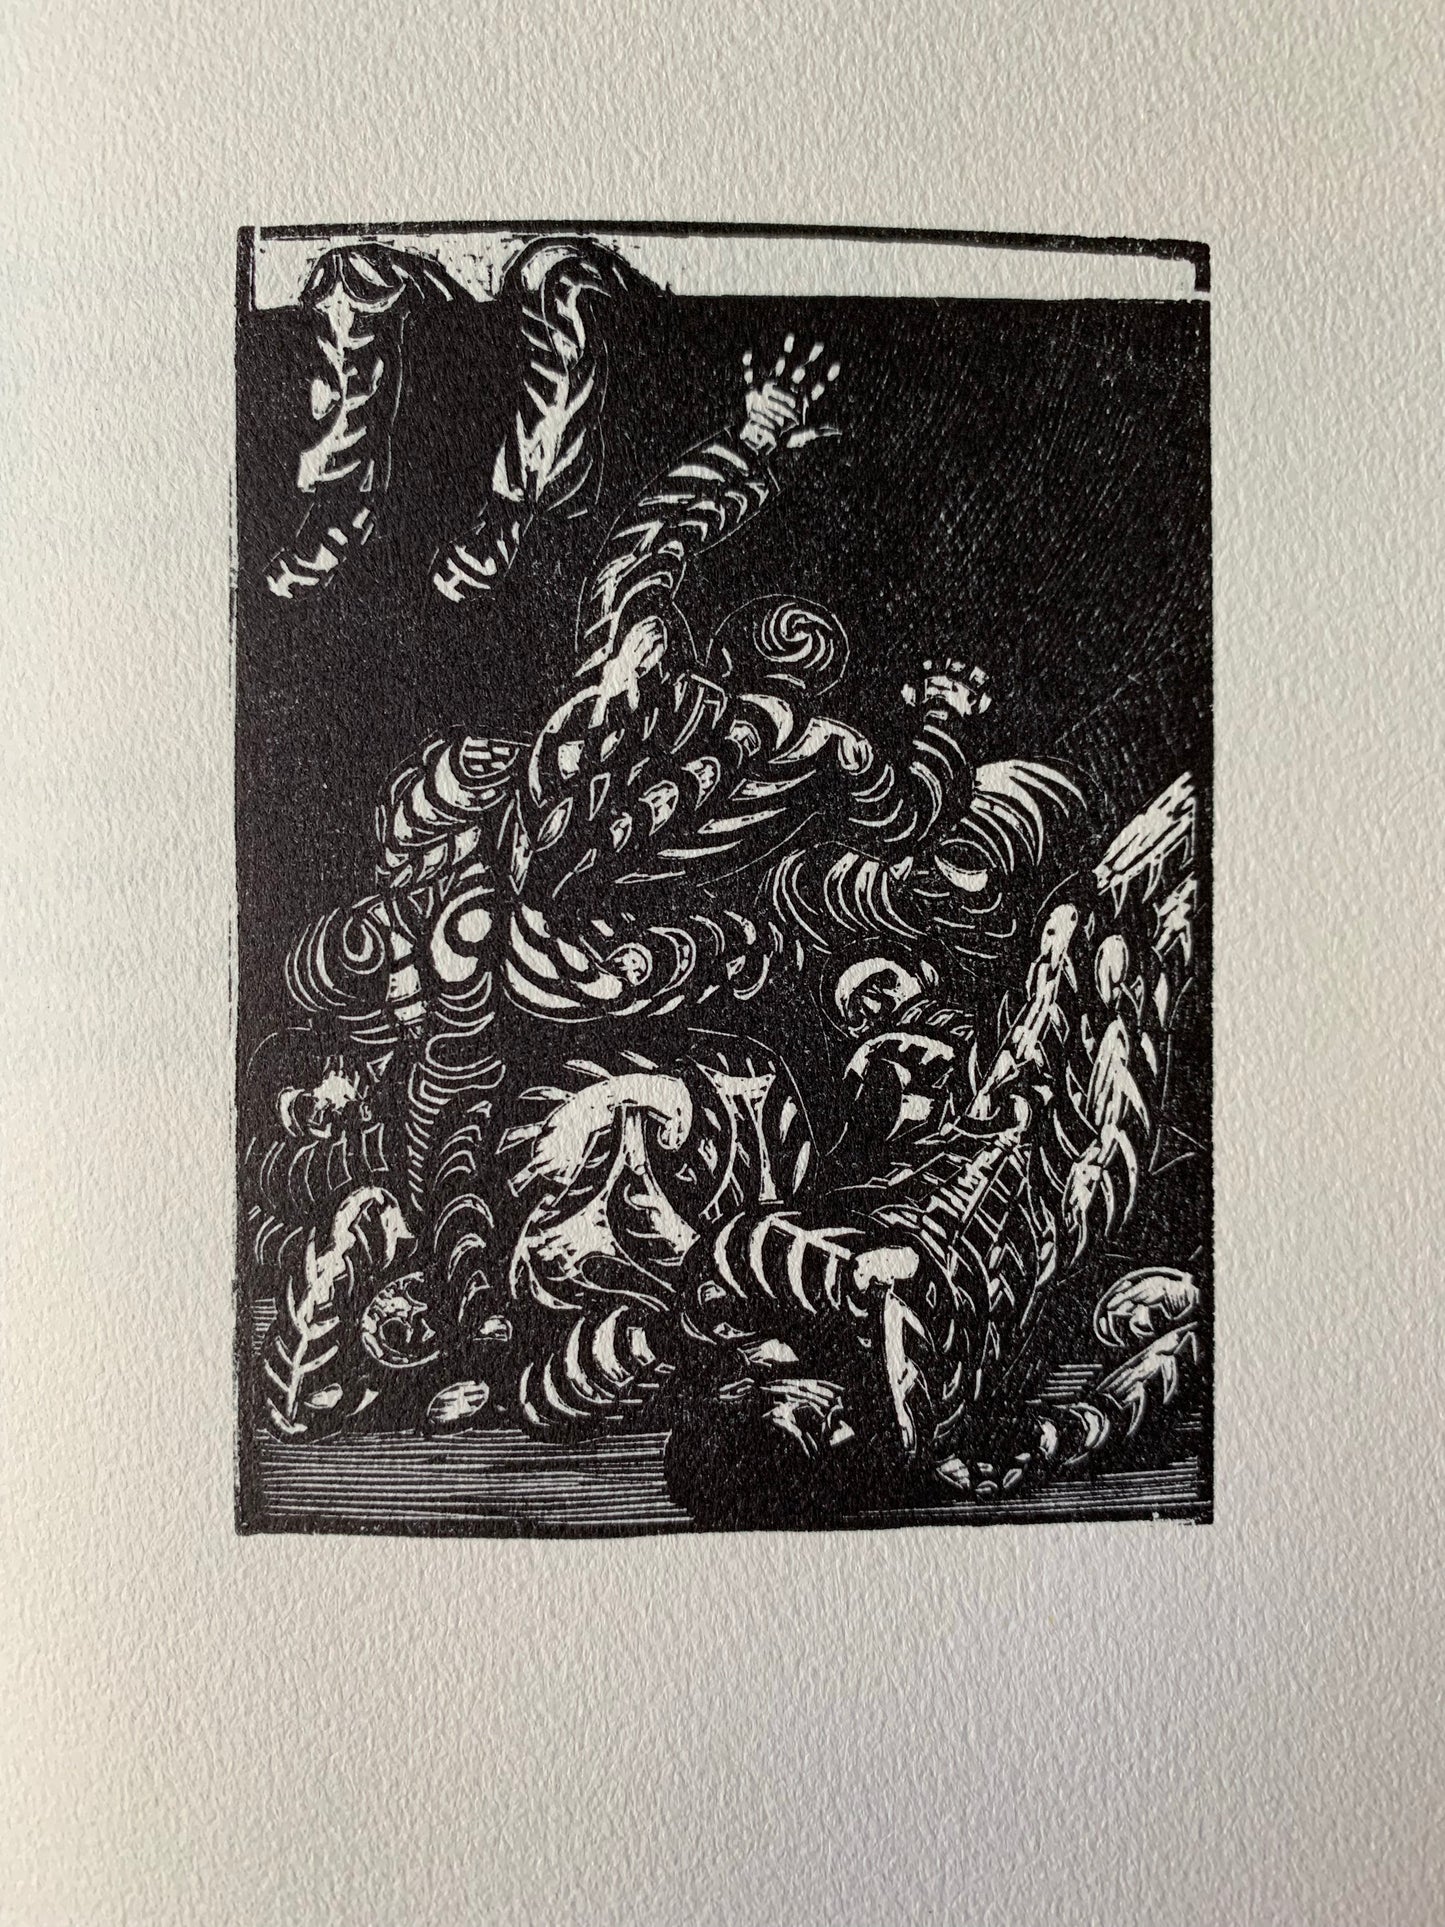 Jan Garff. "Modern Danish Graphics and Poetry", original prints by JF Willumsen ao, 1960